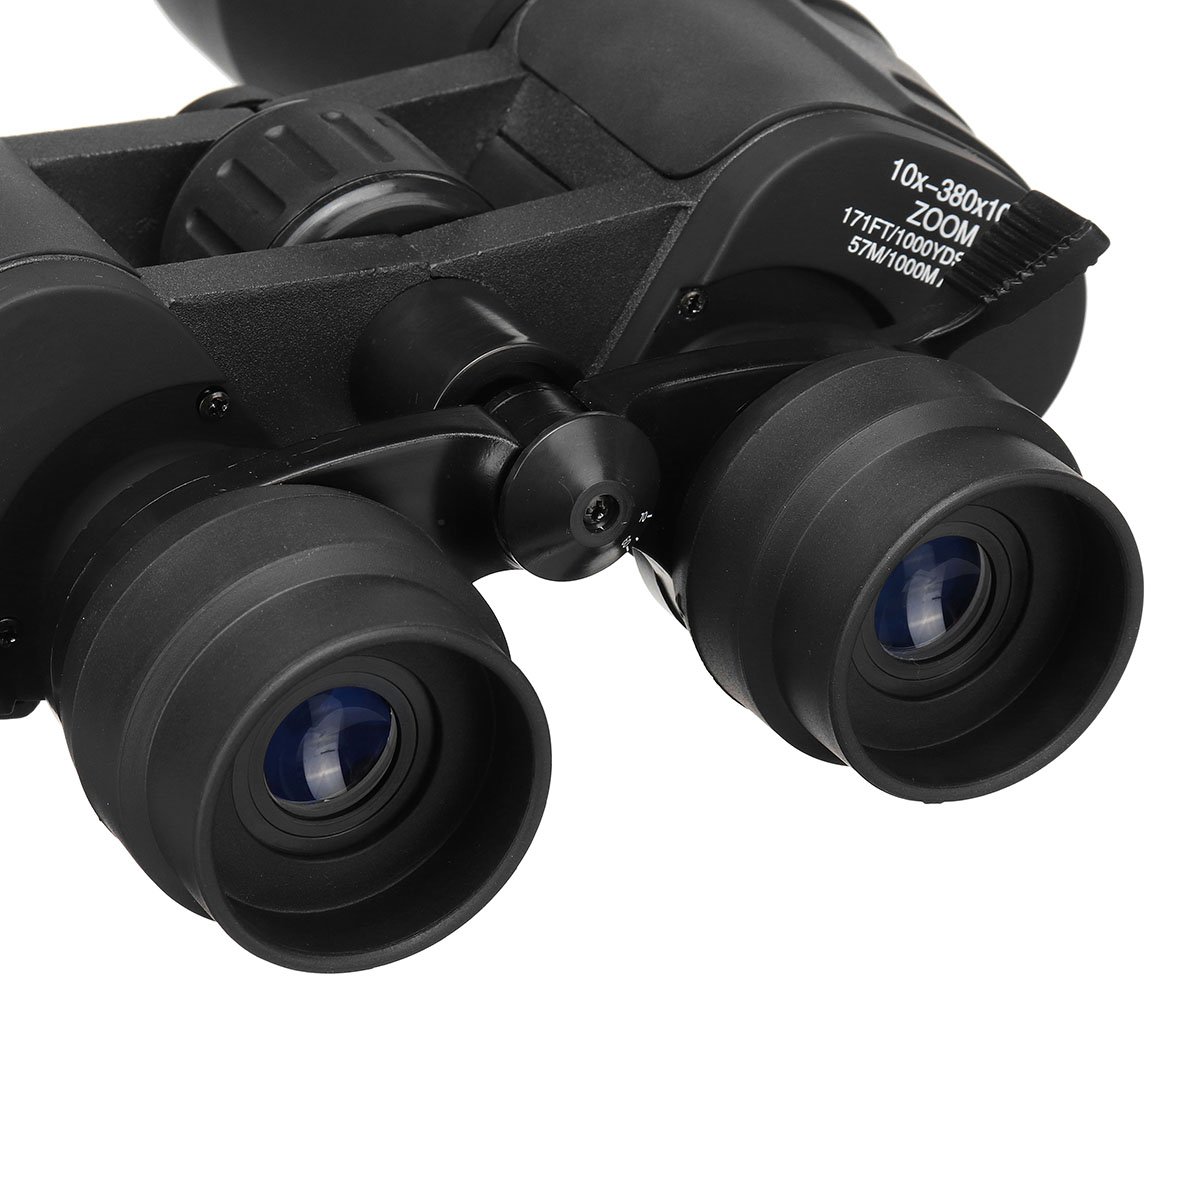 10-380x100-Zoom-Binocular-HD-Optic-BAK4-Day-Night-Vision-Telescope-Camping-Travel-1457827